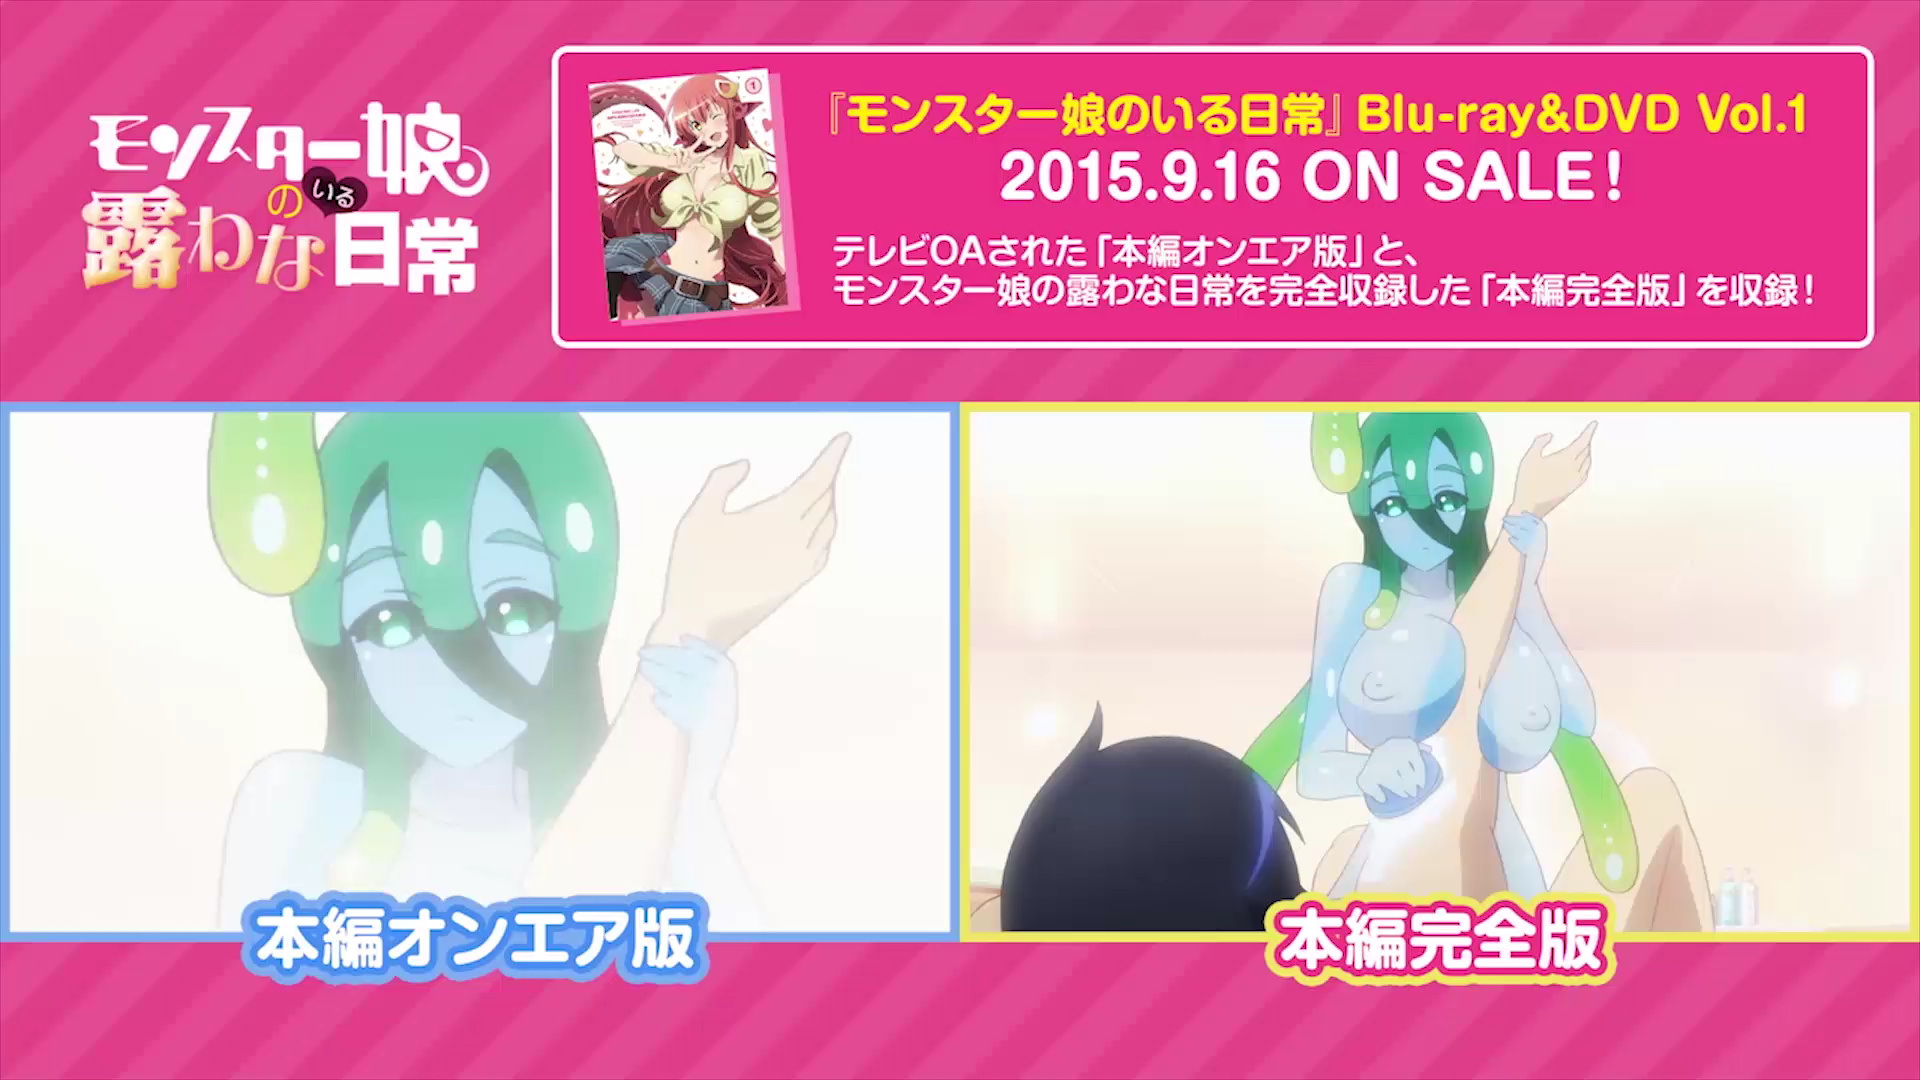 TV vs Blu-Ray Monster Musume anime blu-ray volume 1 uncensored 12